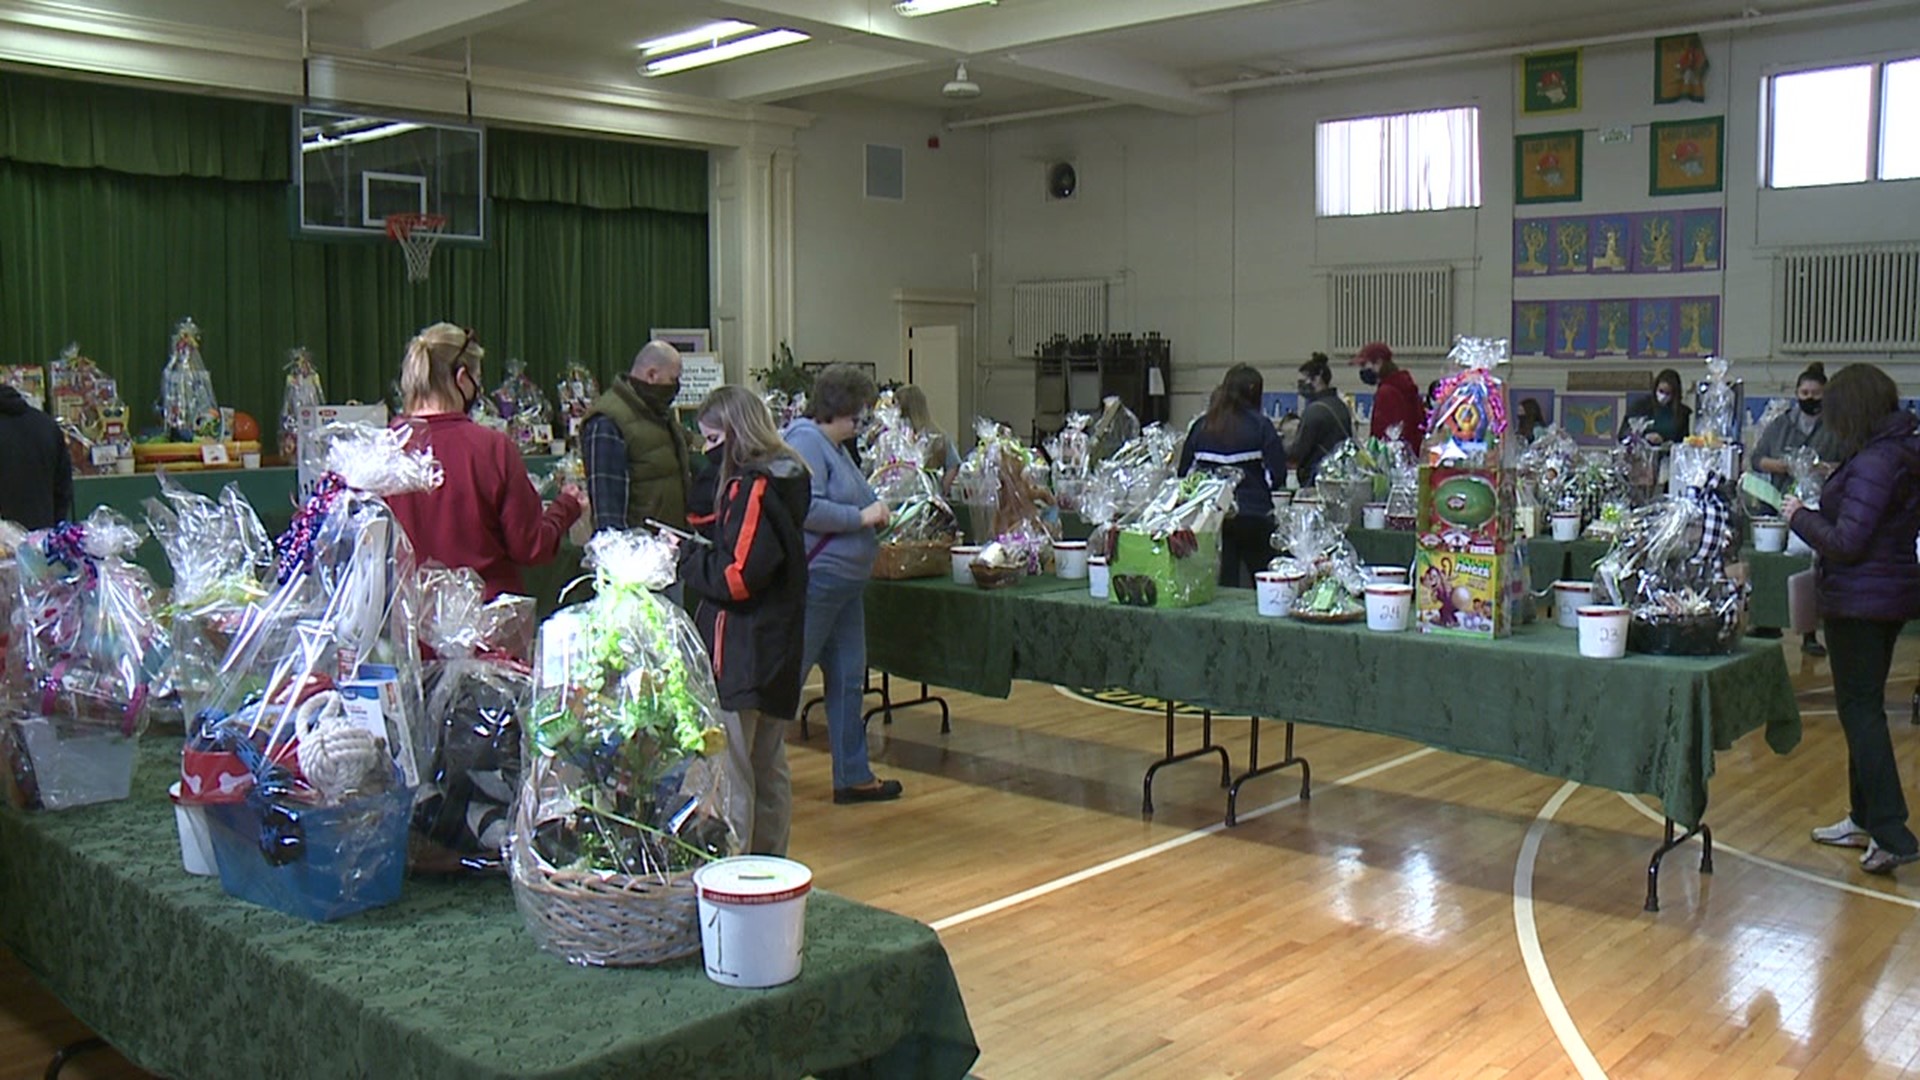 More than 100 raffle baskets were up for grabs at St. John Neumann Regional School.